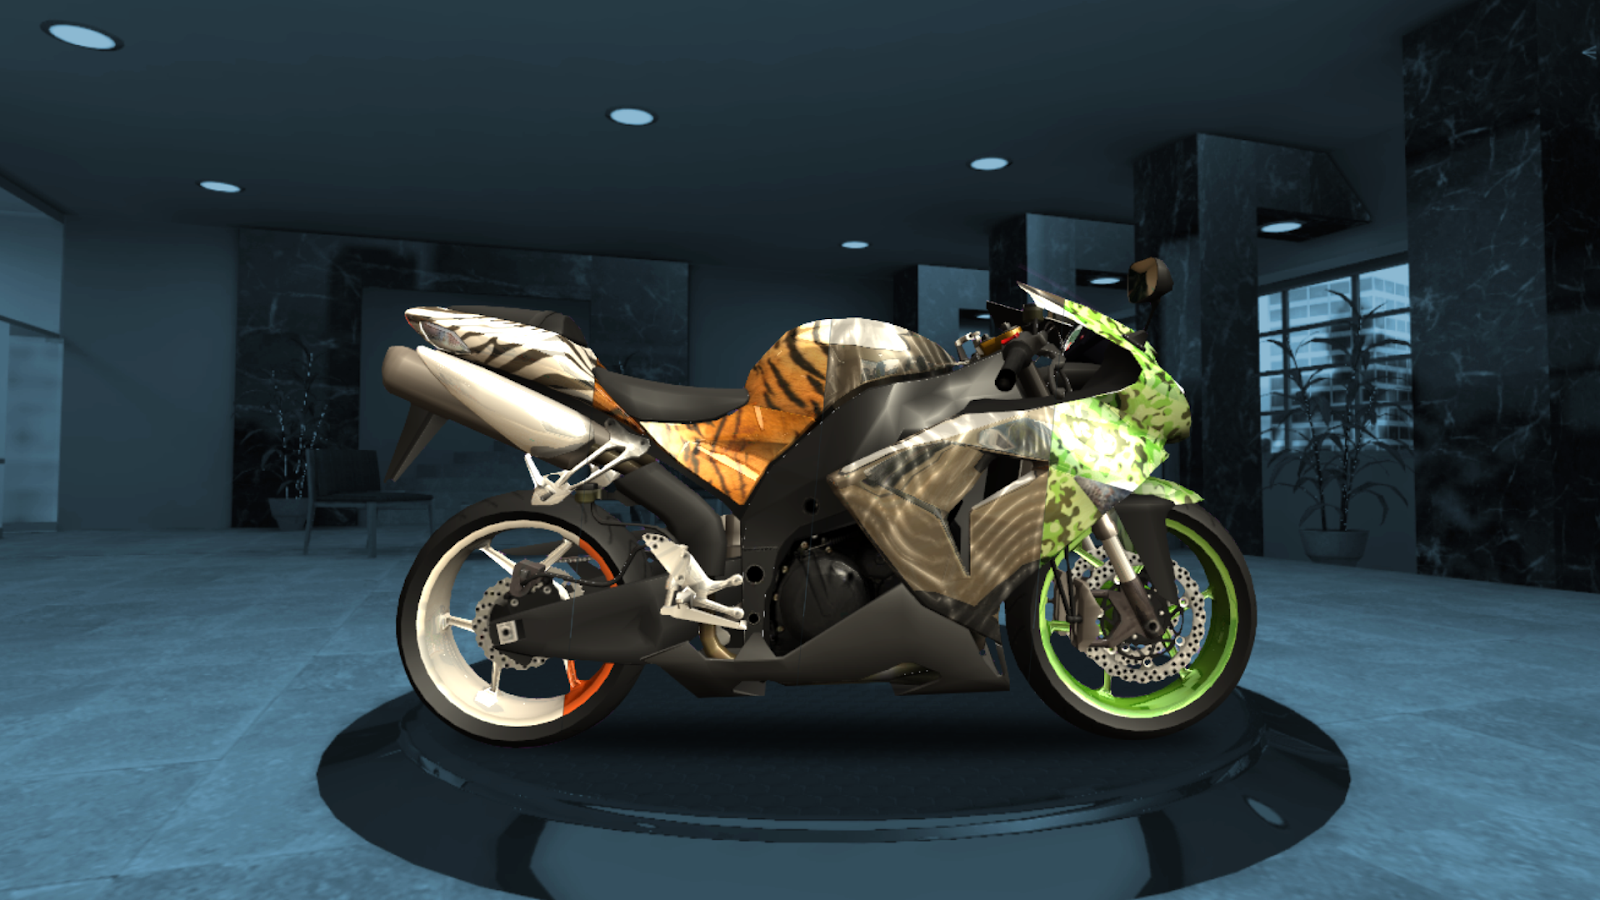 Racing Fever : Moto free downloads